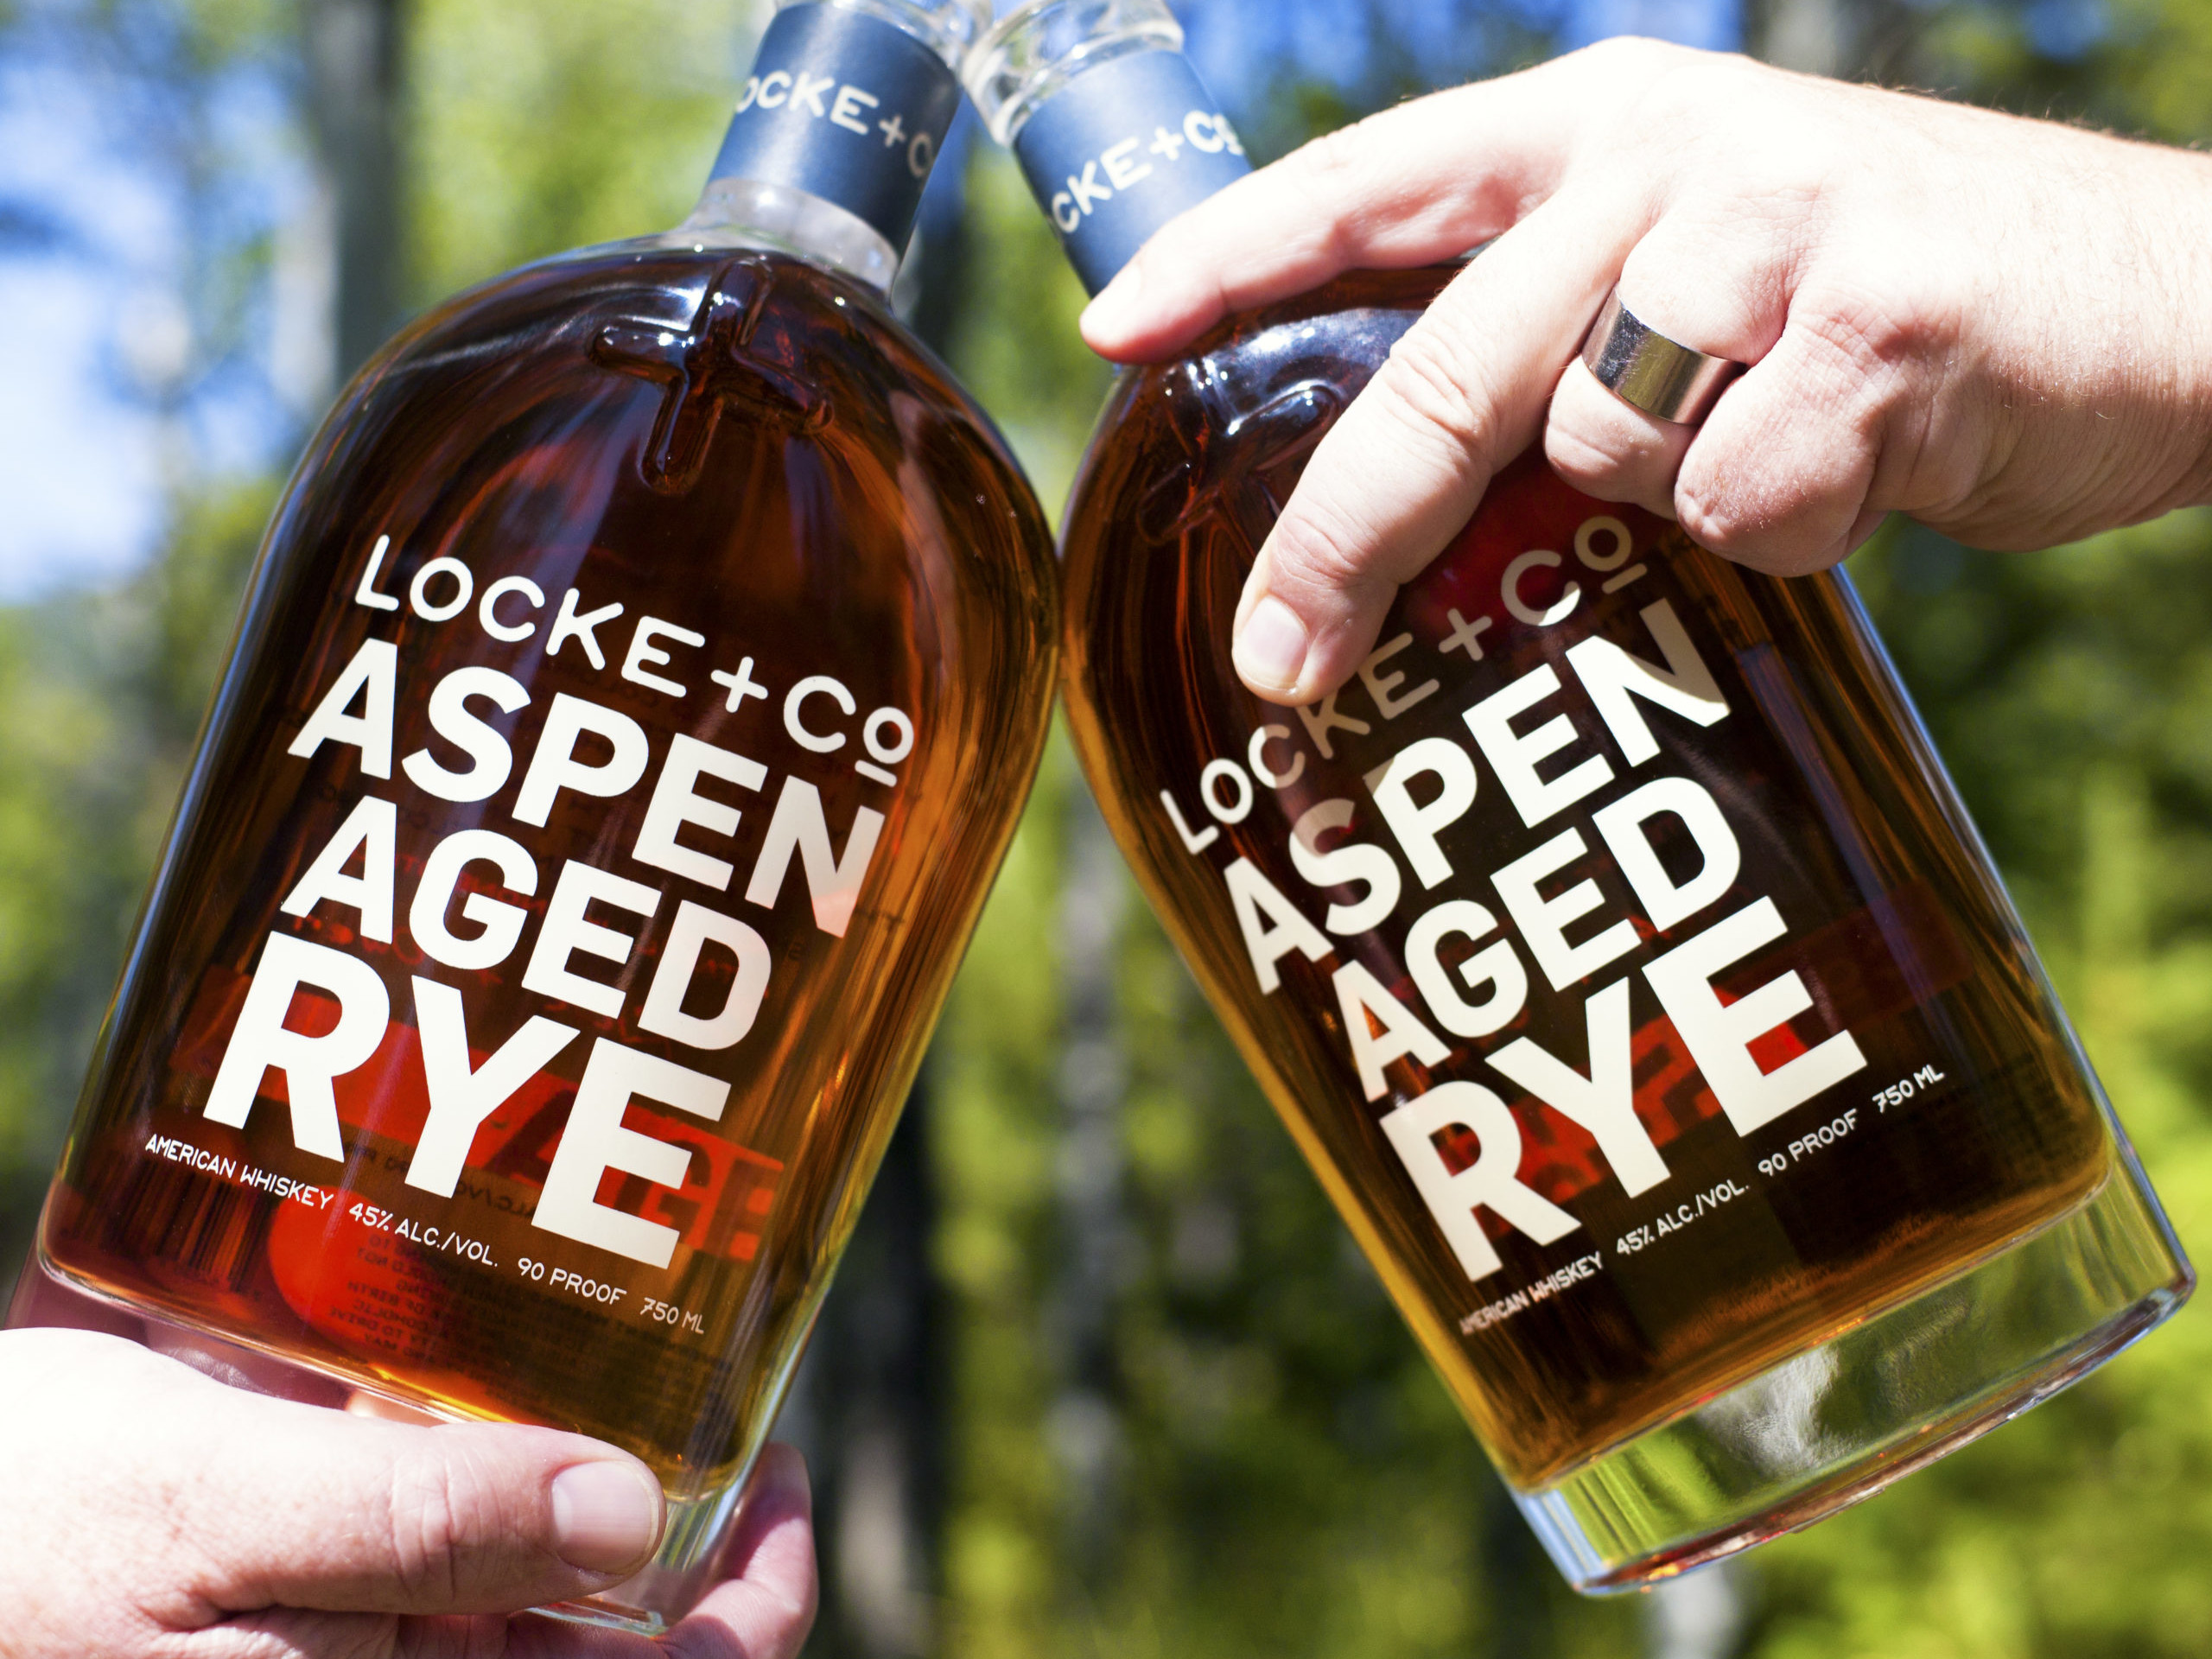 Two people cheer-sings Locke + Co Distilling Aspen Aged Rye Whiskey Bottles